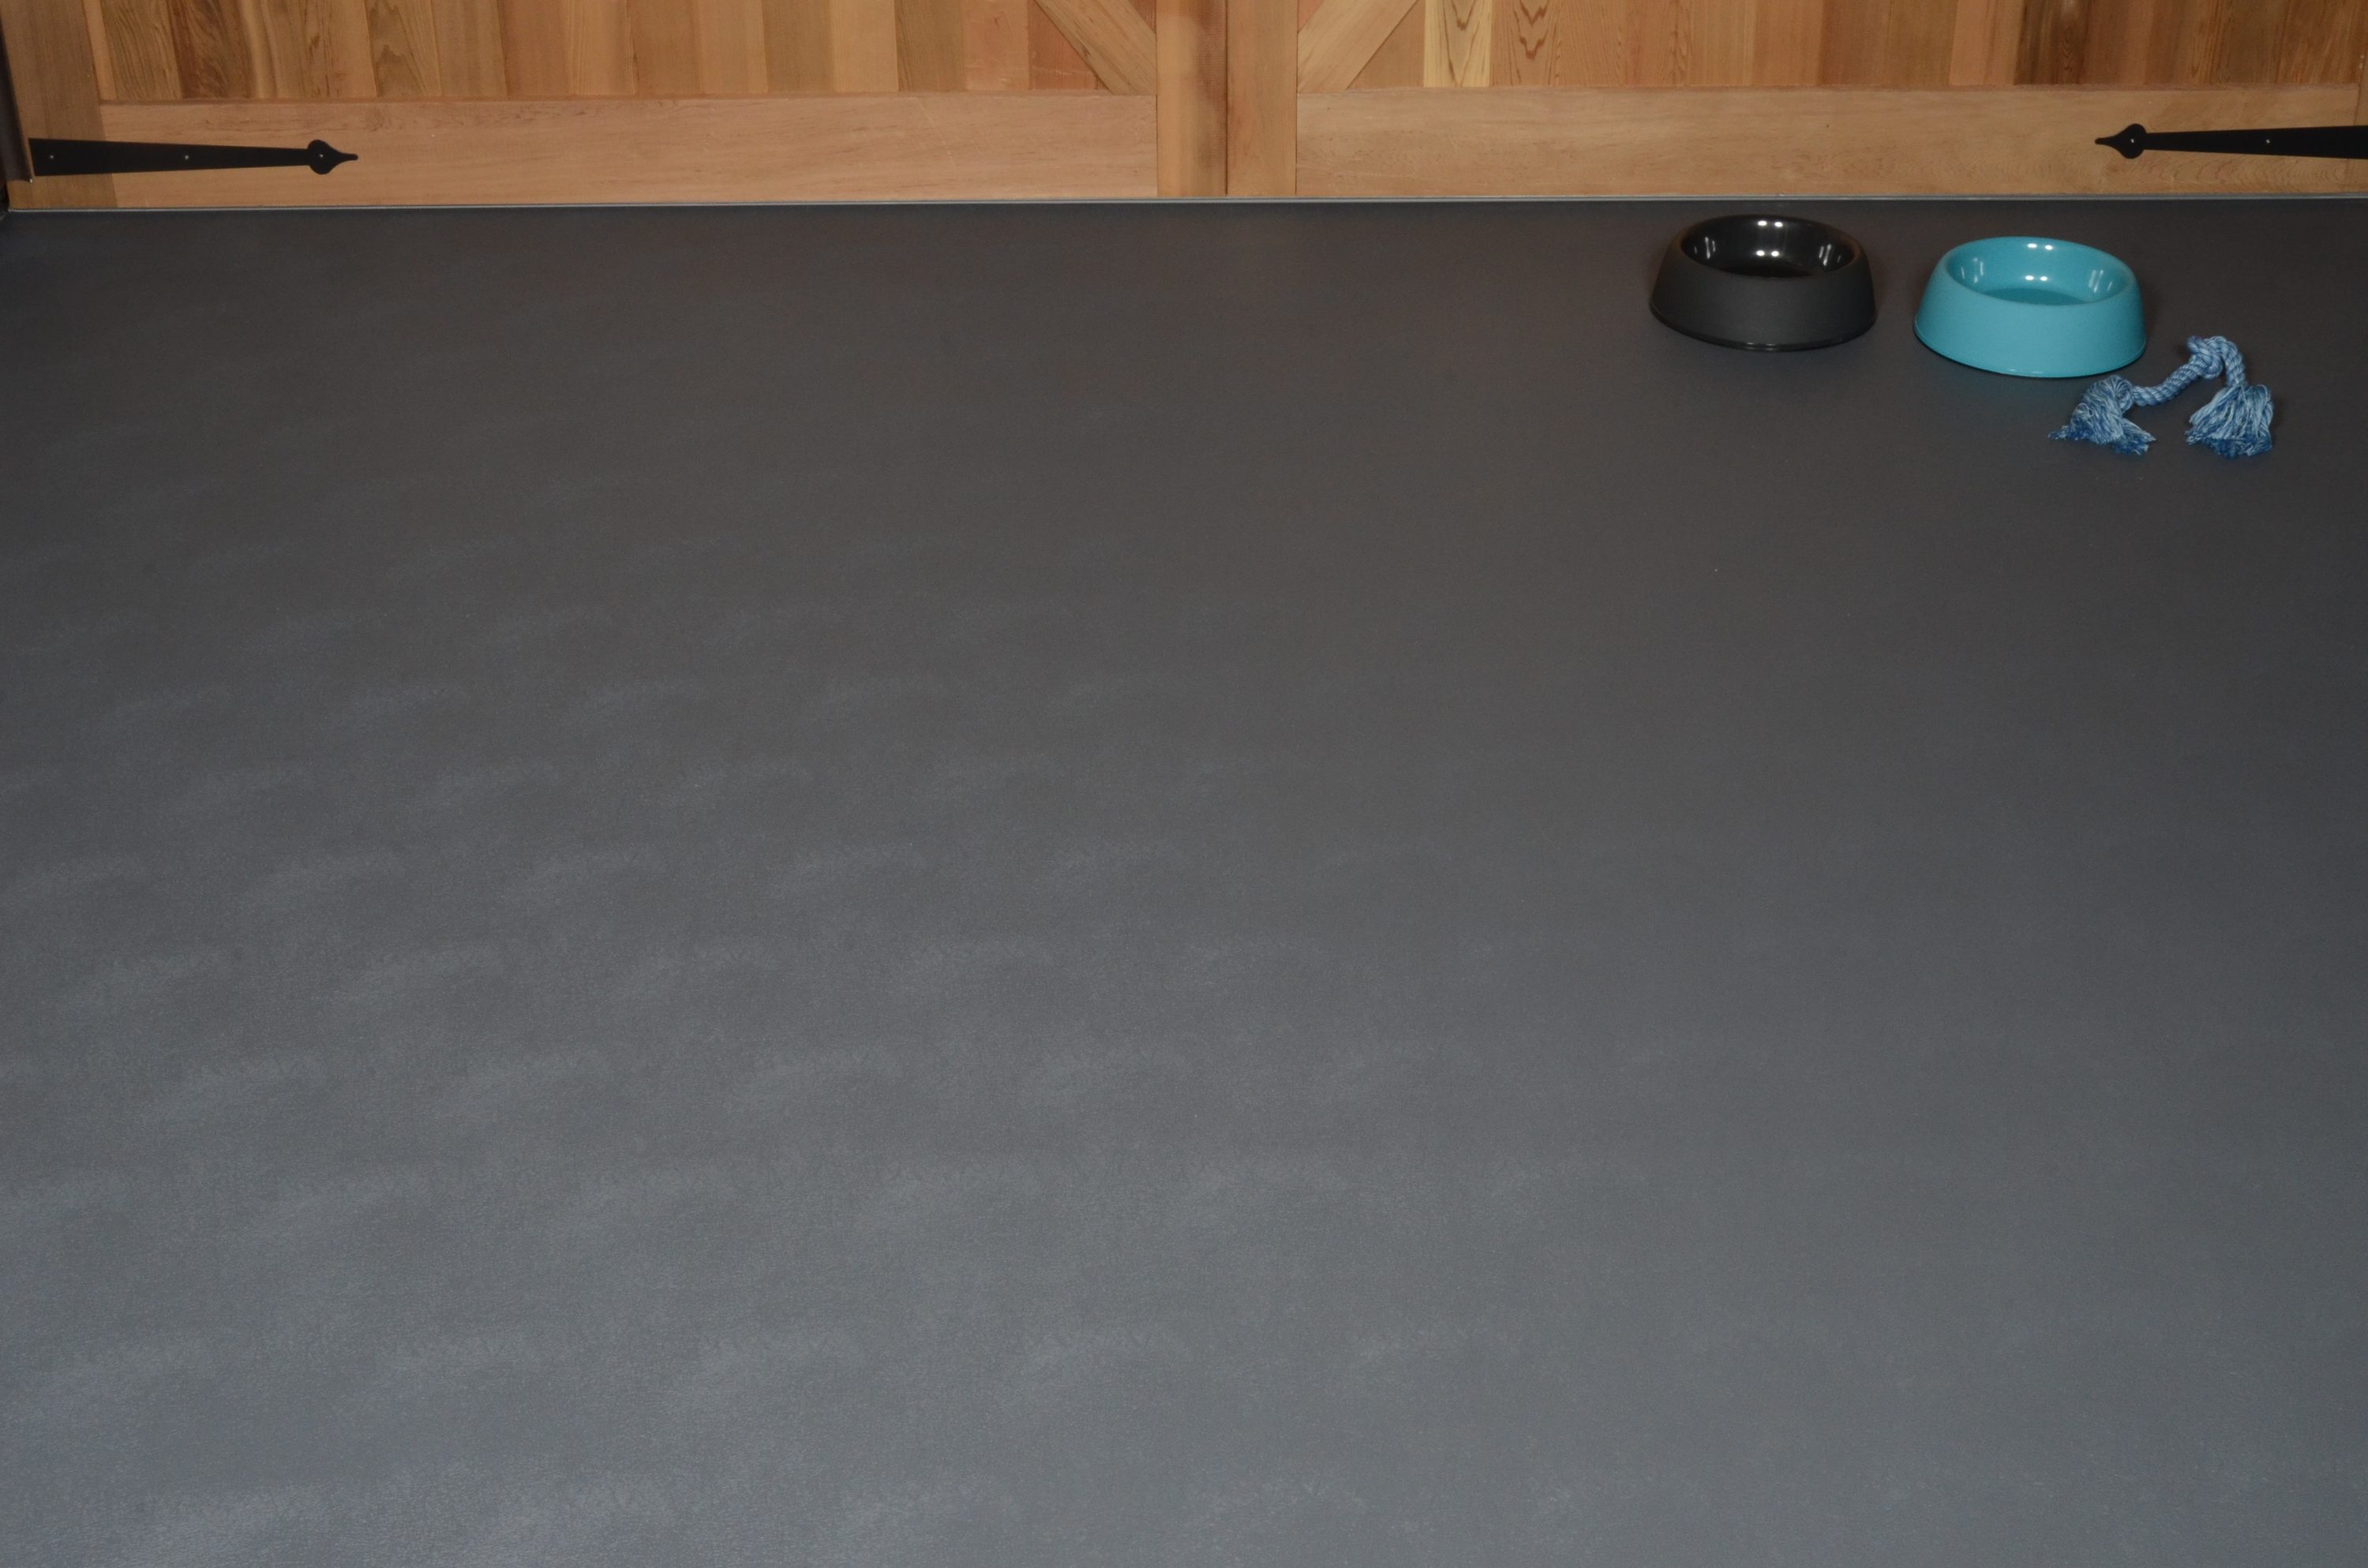 BLT G-Floor Garage Floor Runner Mat 30” x 24' Levant Pattern